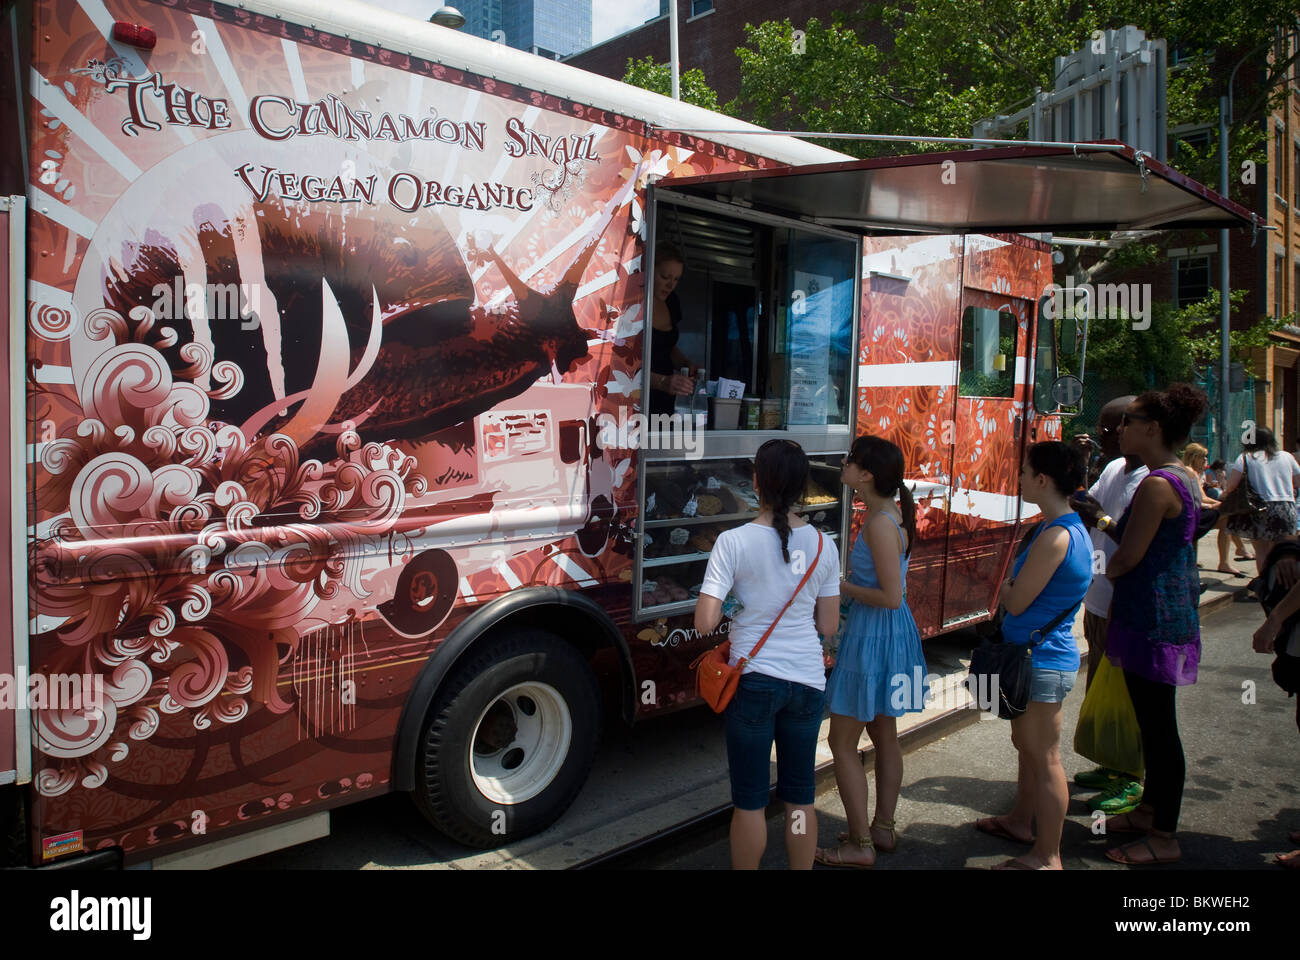 The Cinnamon Snail Vegan Organic truck is seen at the Hell's Kitchen Flea Market in New York Stock Photo